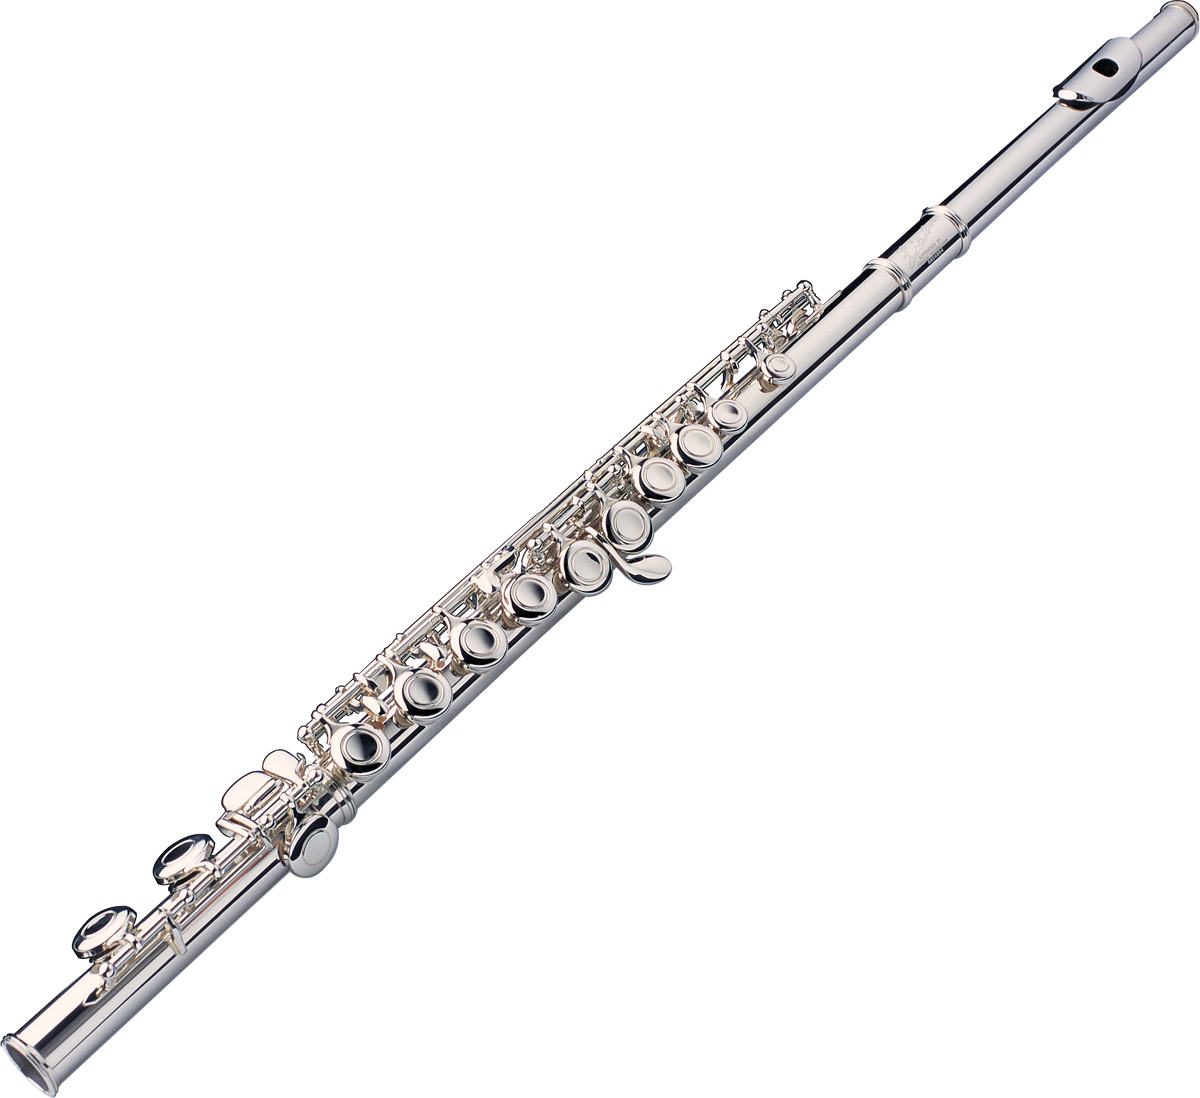 flutes clipart clarinet